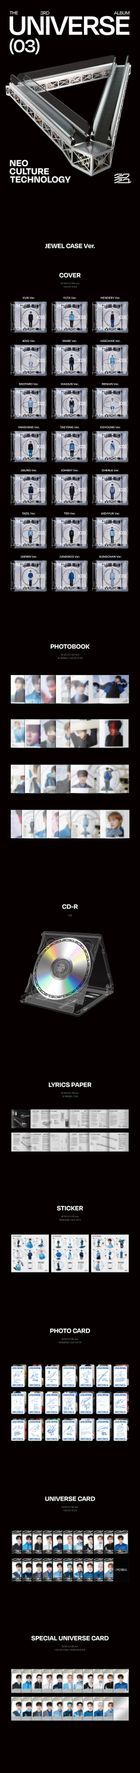 NCT Vol. 3 - Universe (Jewel Case Version) (Chenle Version)